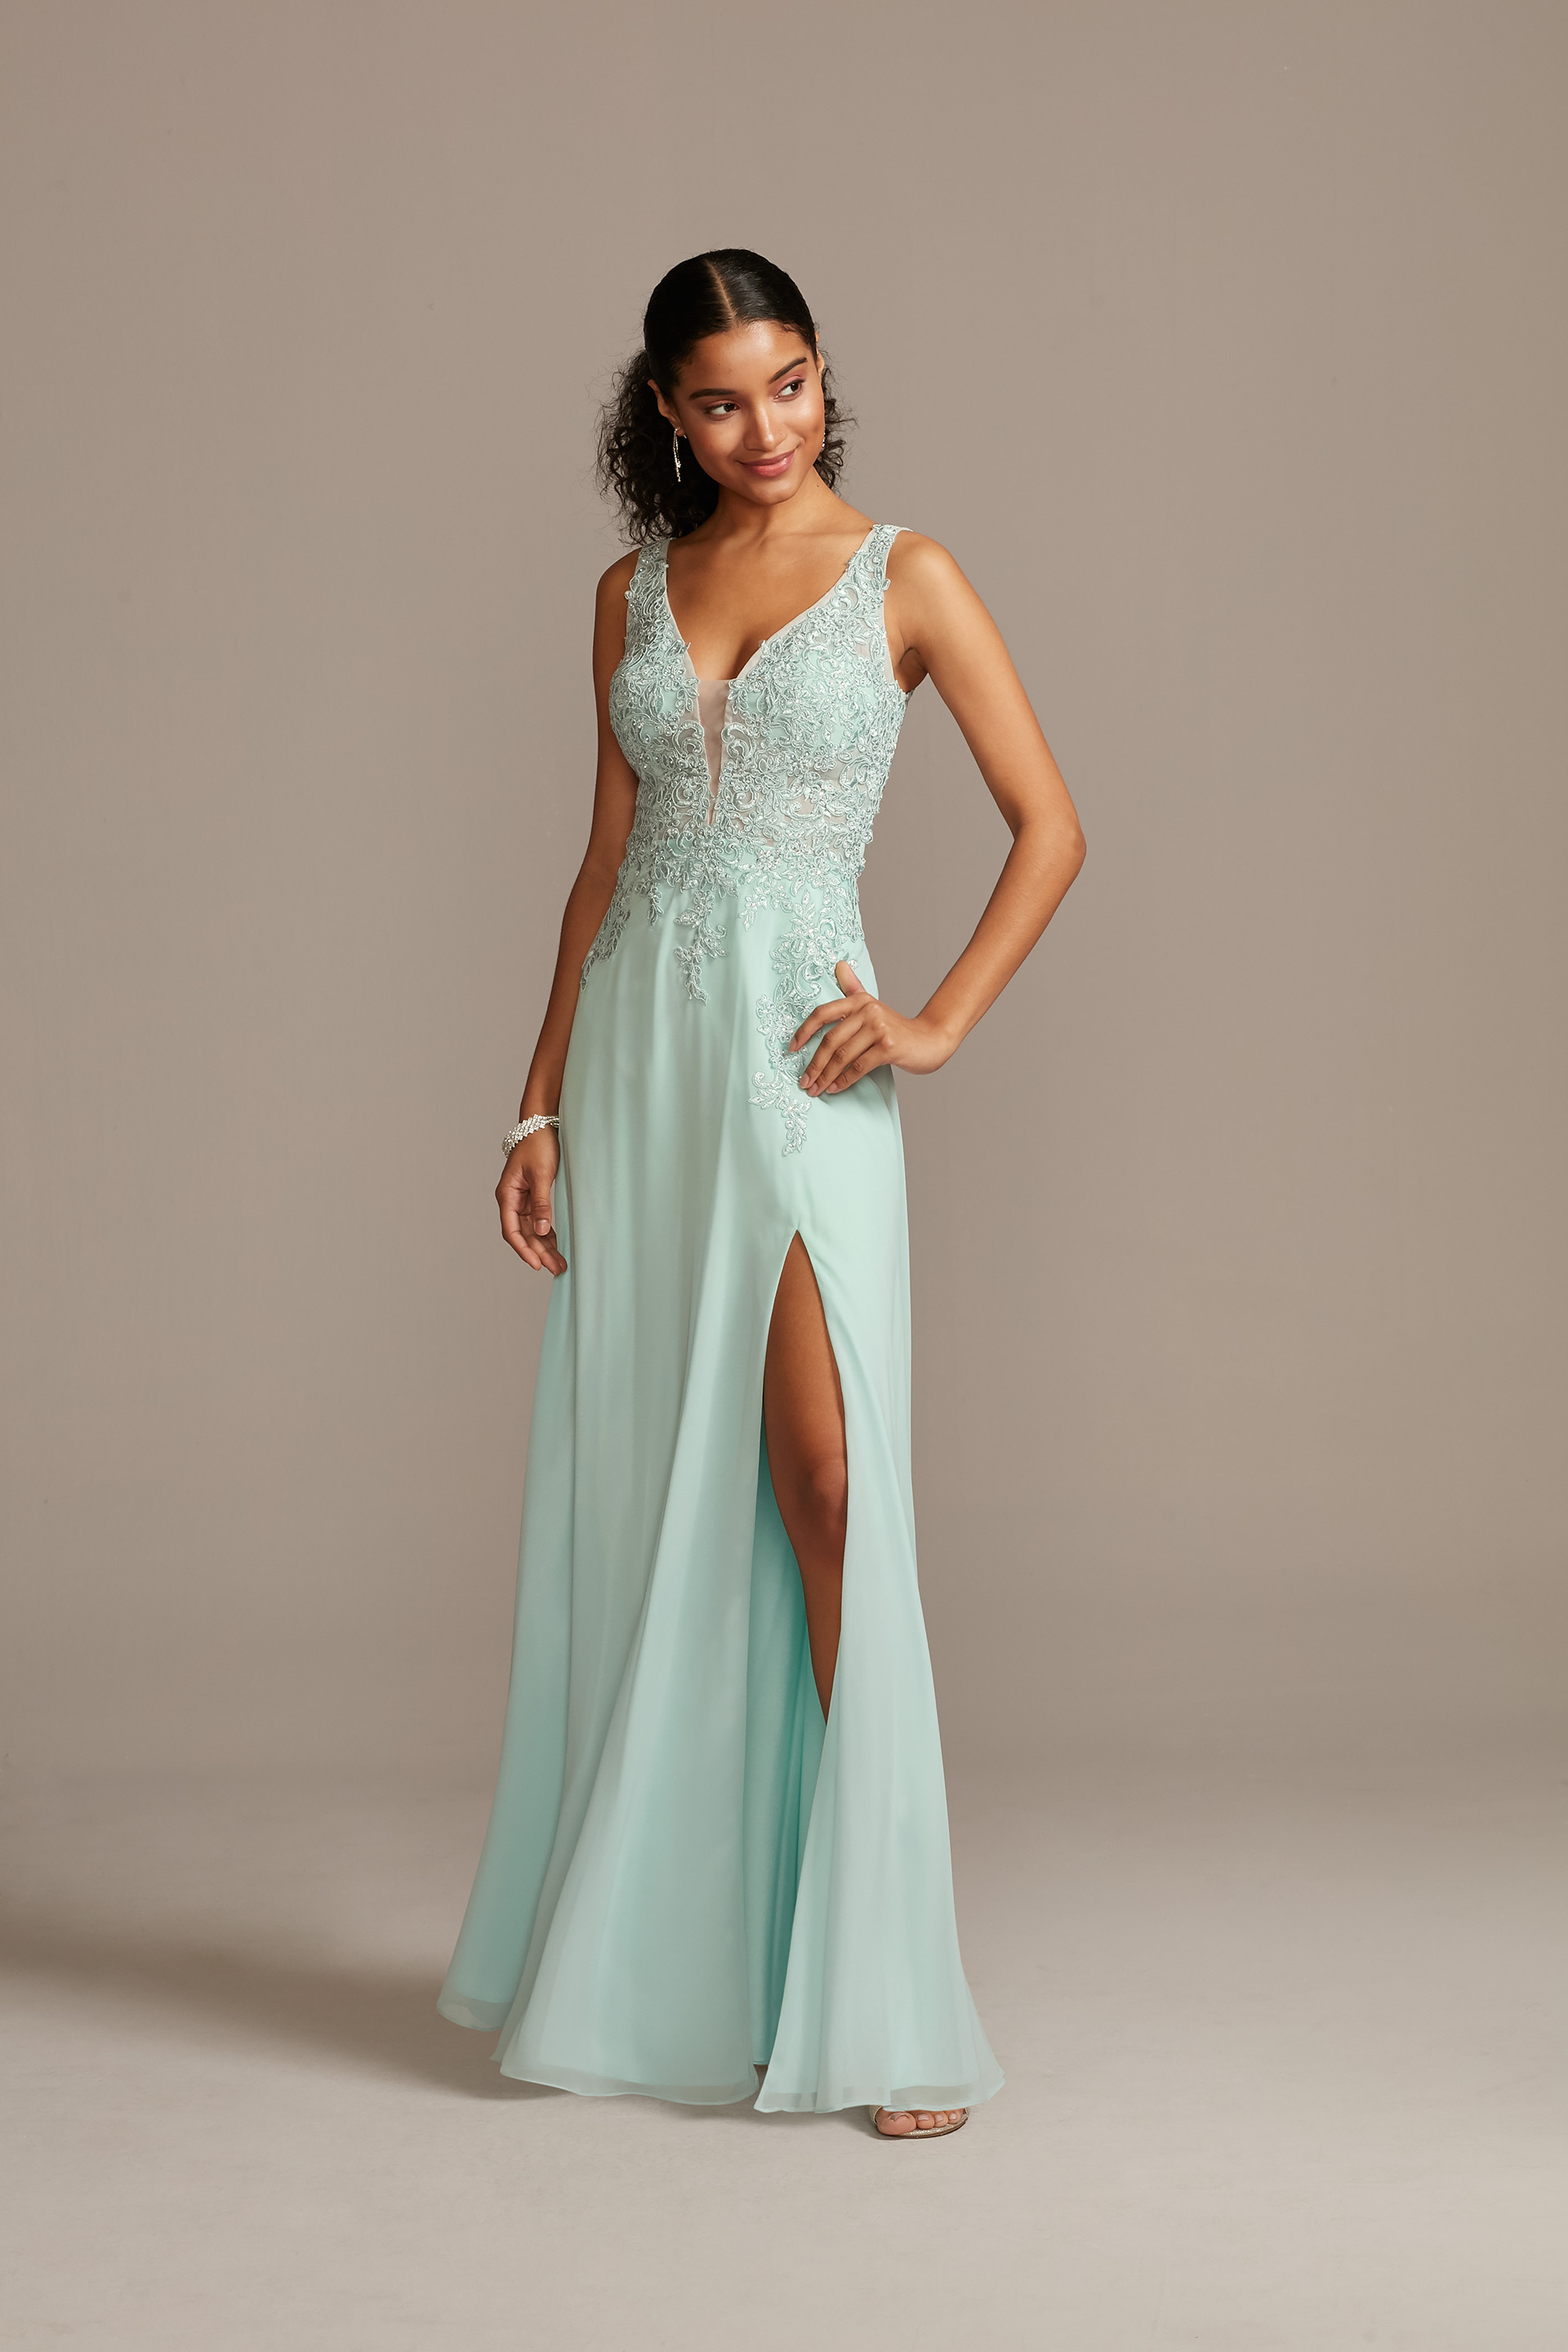 Prom Dresses by Zodiac Sign - David's Bridal Blog